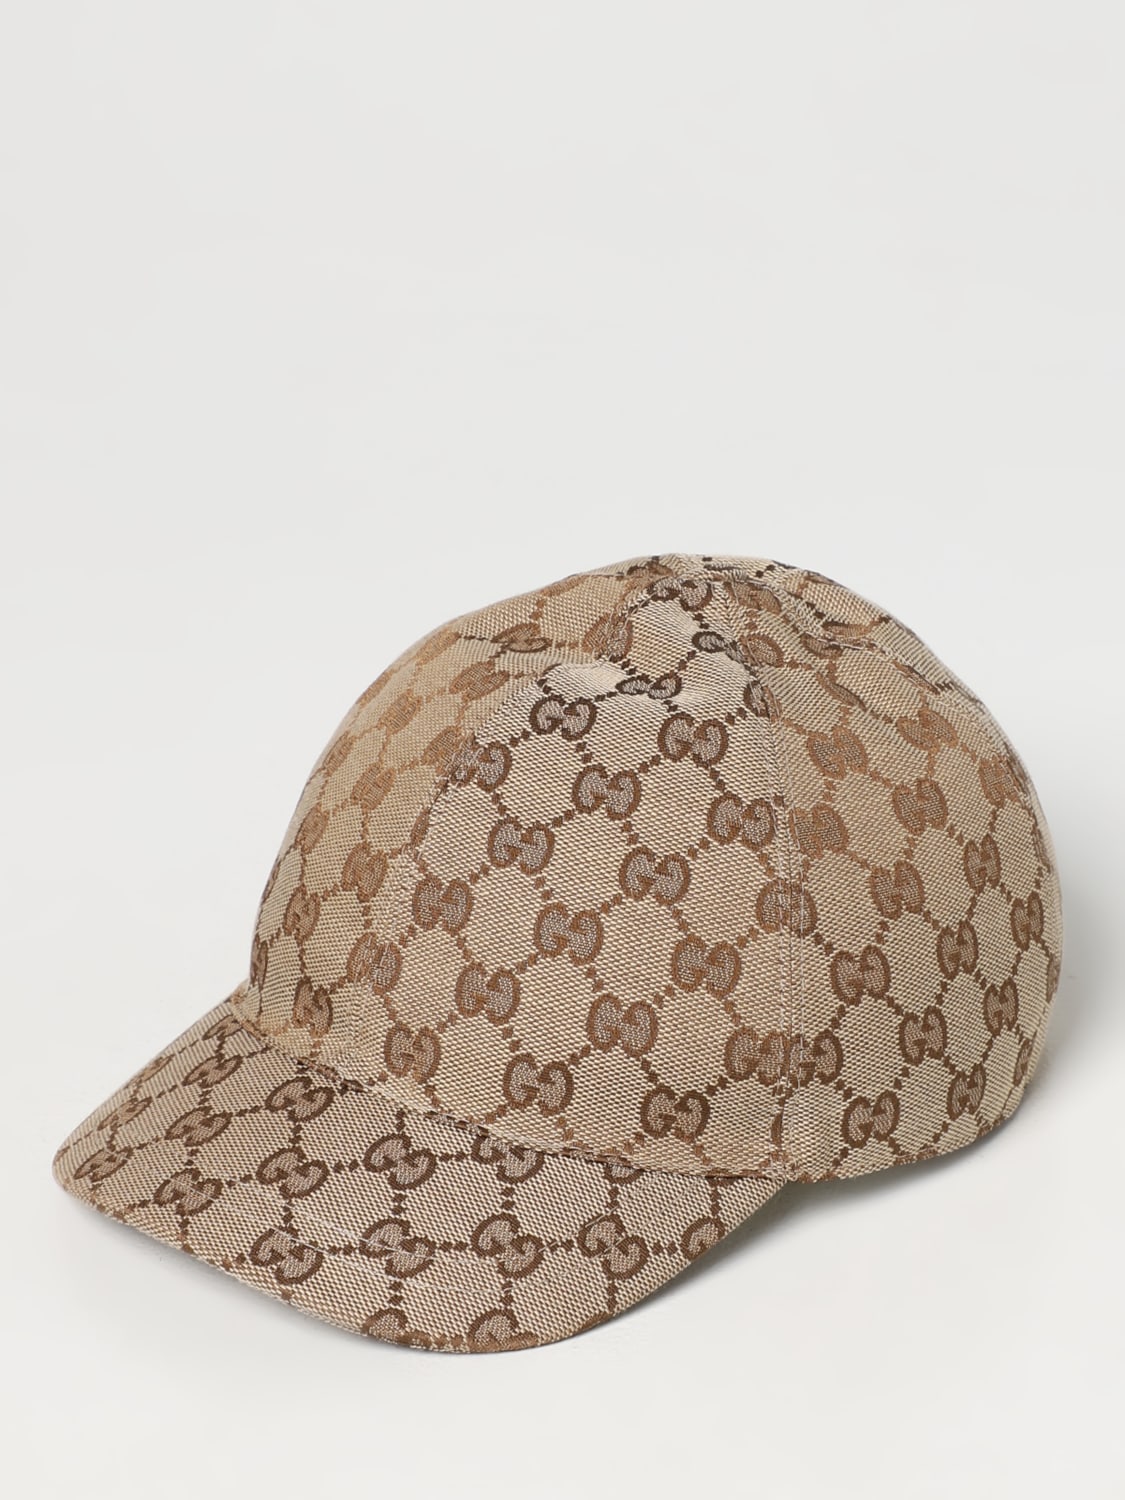 Gucci Hats for Women, Baseball Caps & Beanies